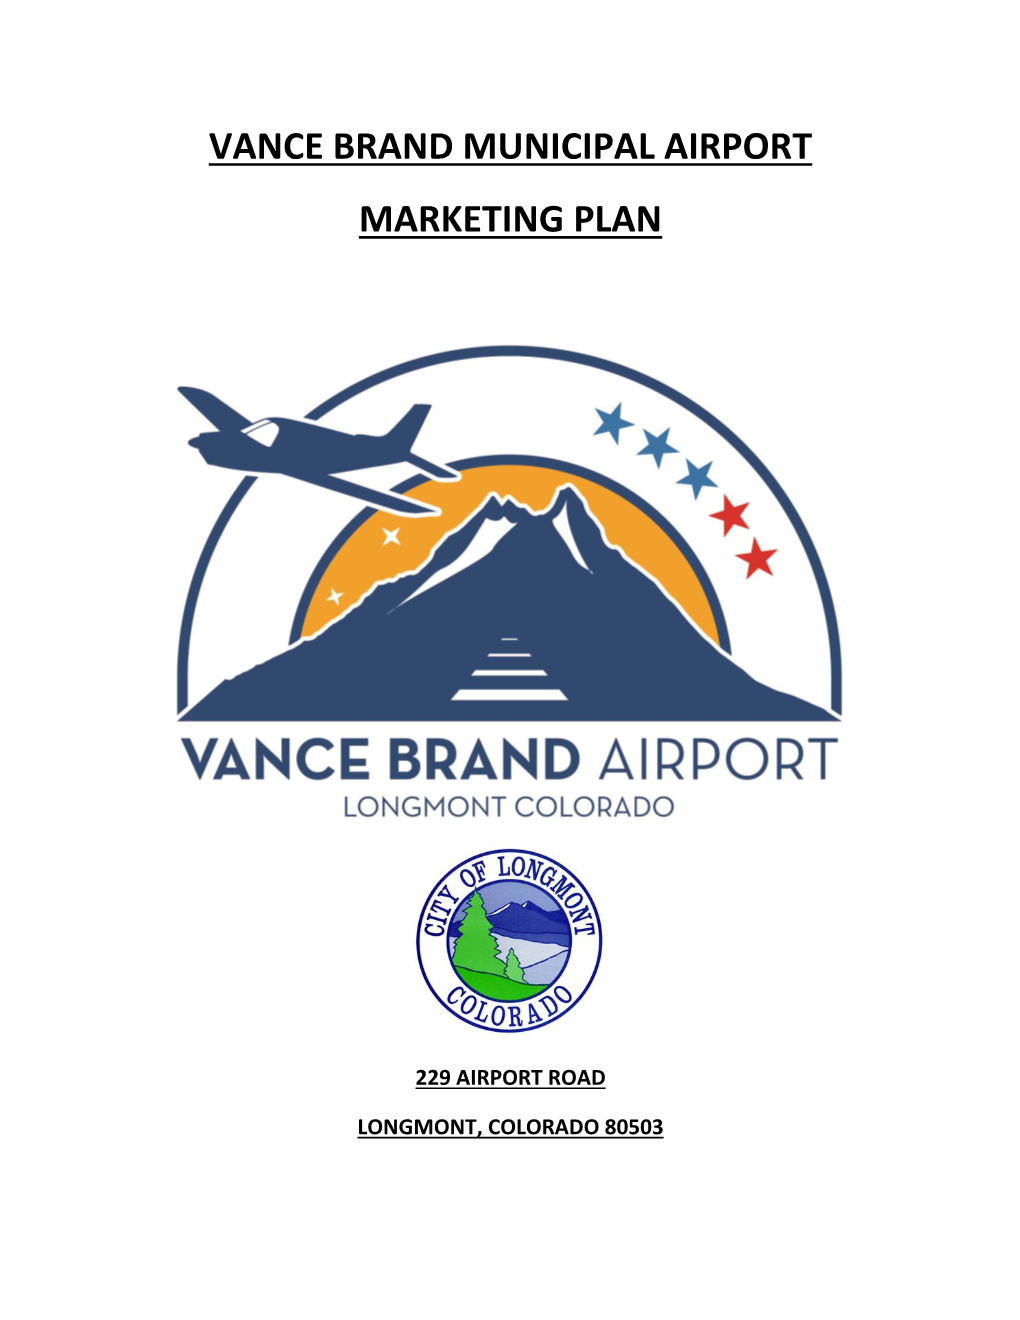 Vance Brand Airport Marketing Plan